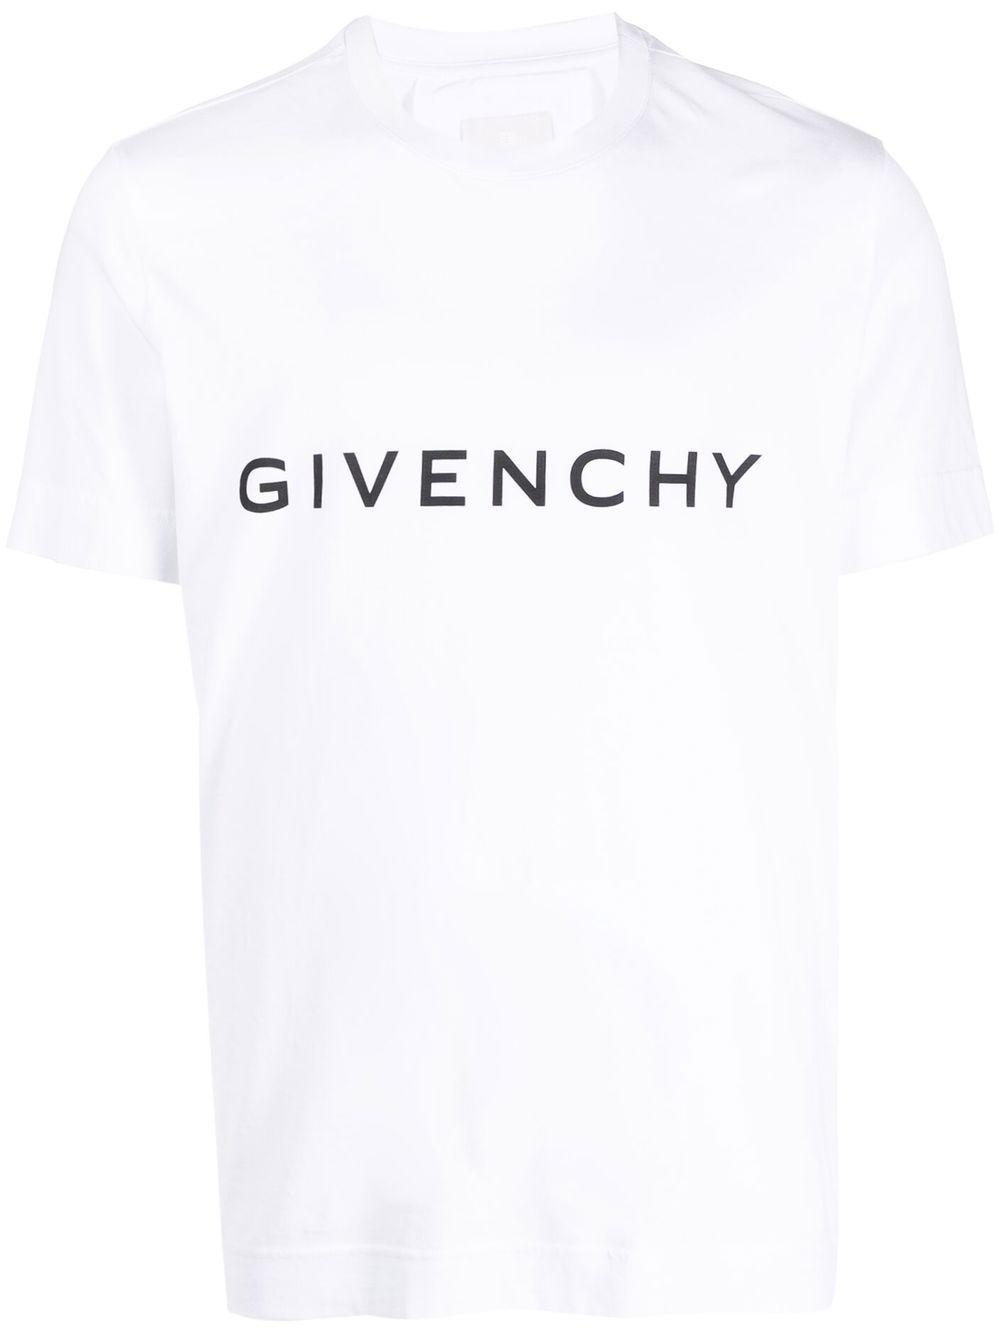 GIVENCHY PARIS Tシャツ